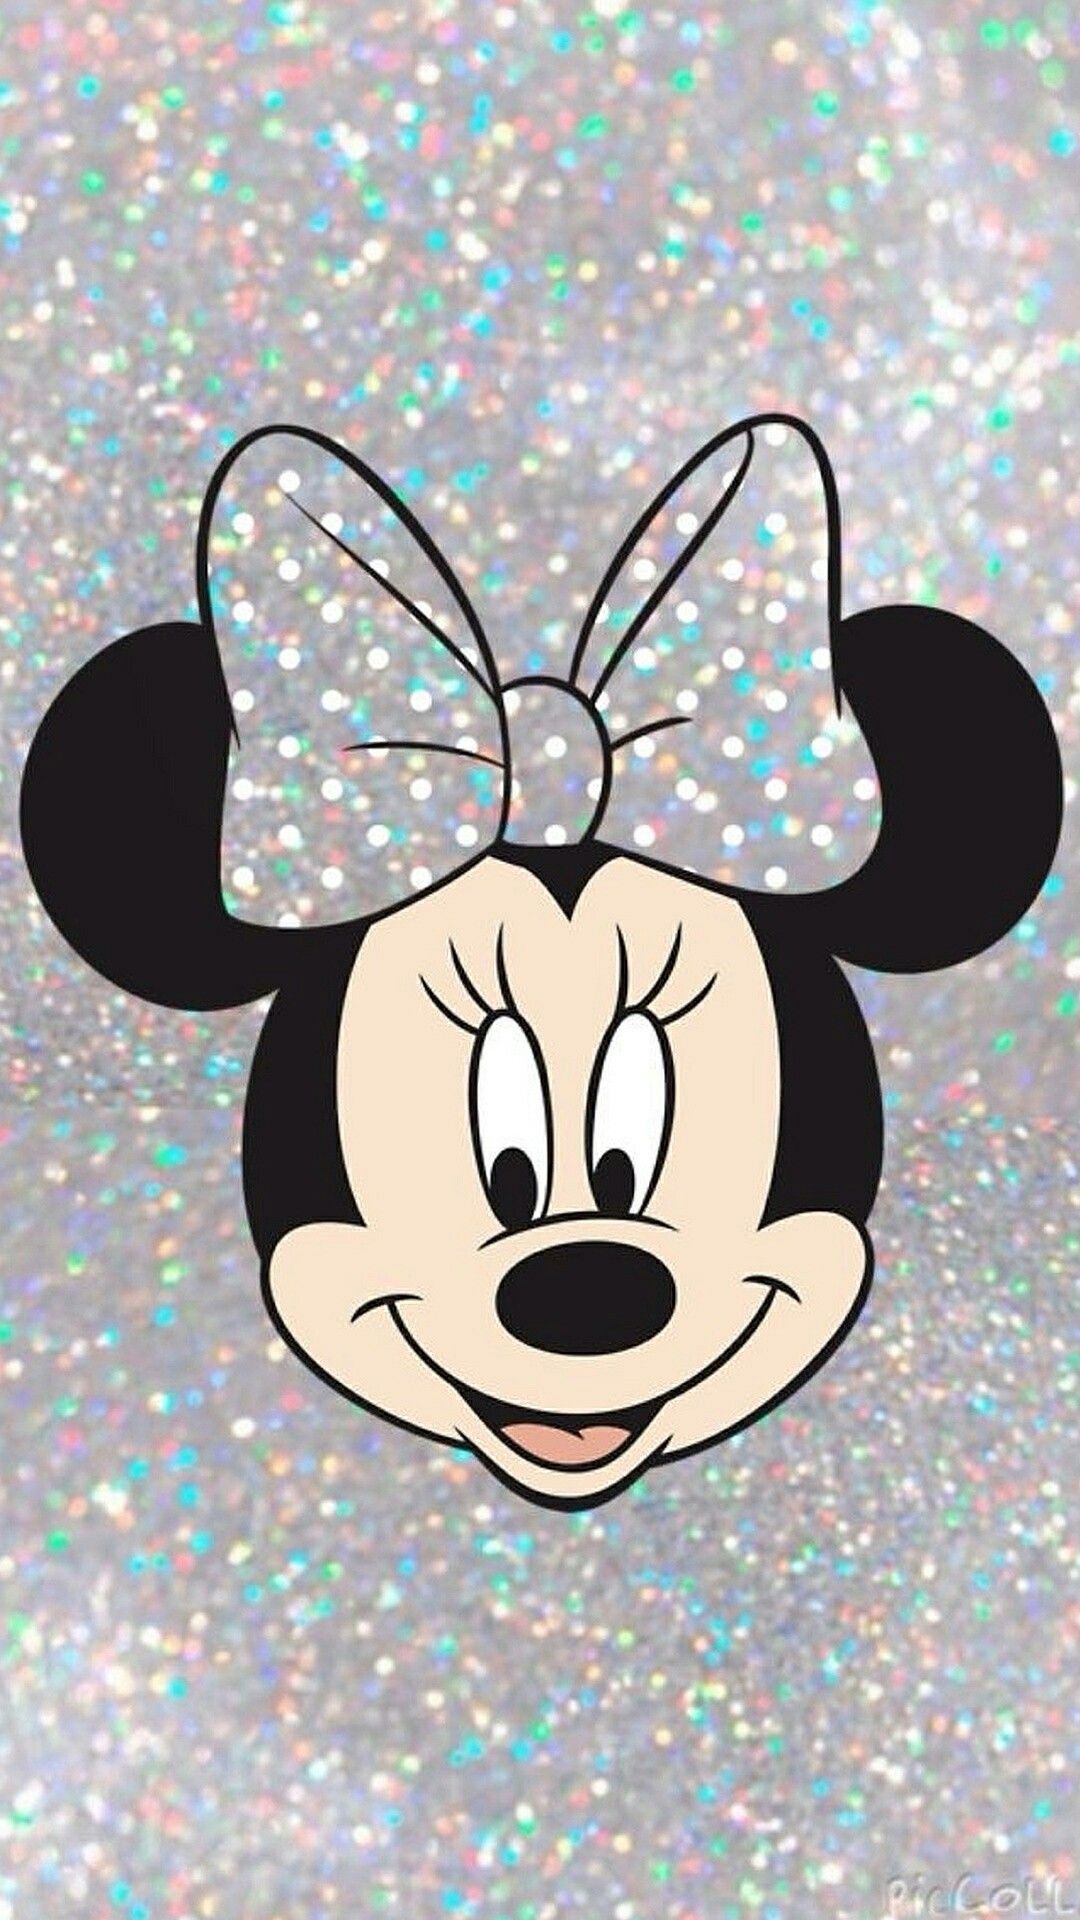 Cute Minnie Mouse Glitter Wallpaper Free Cute Minnie Mouse Glitter Background